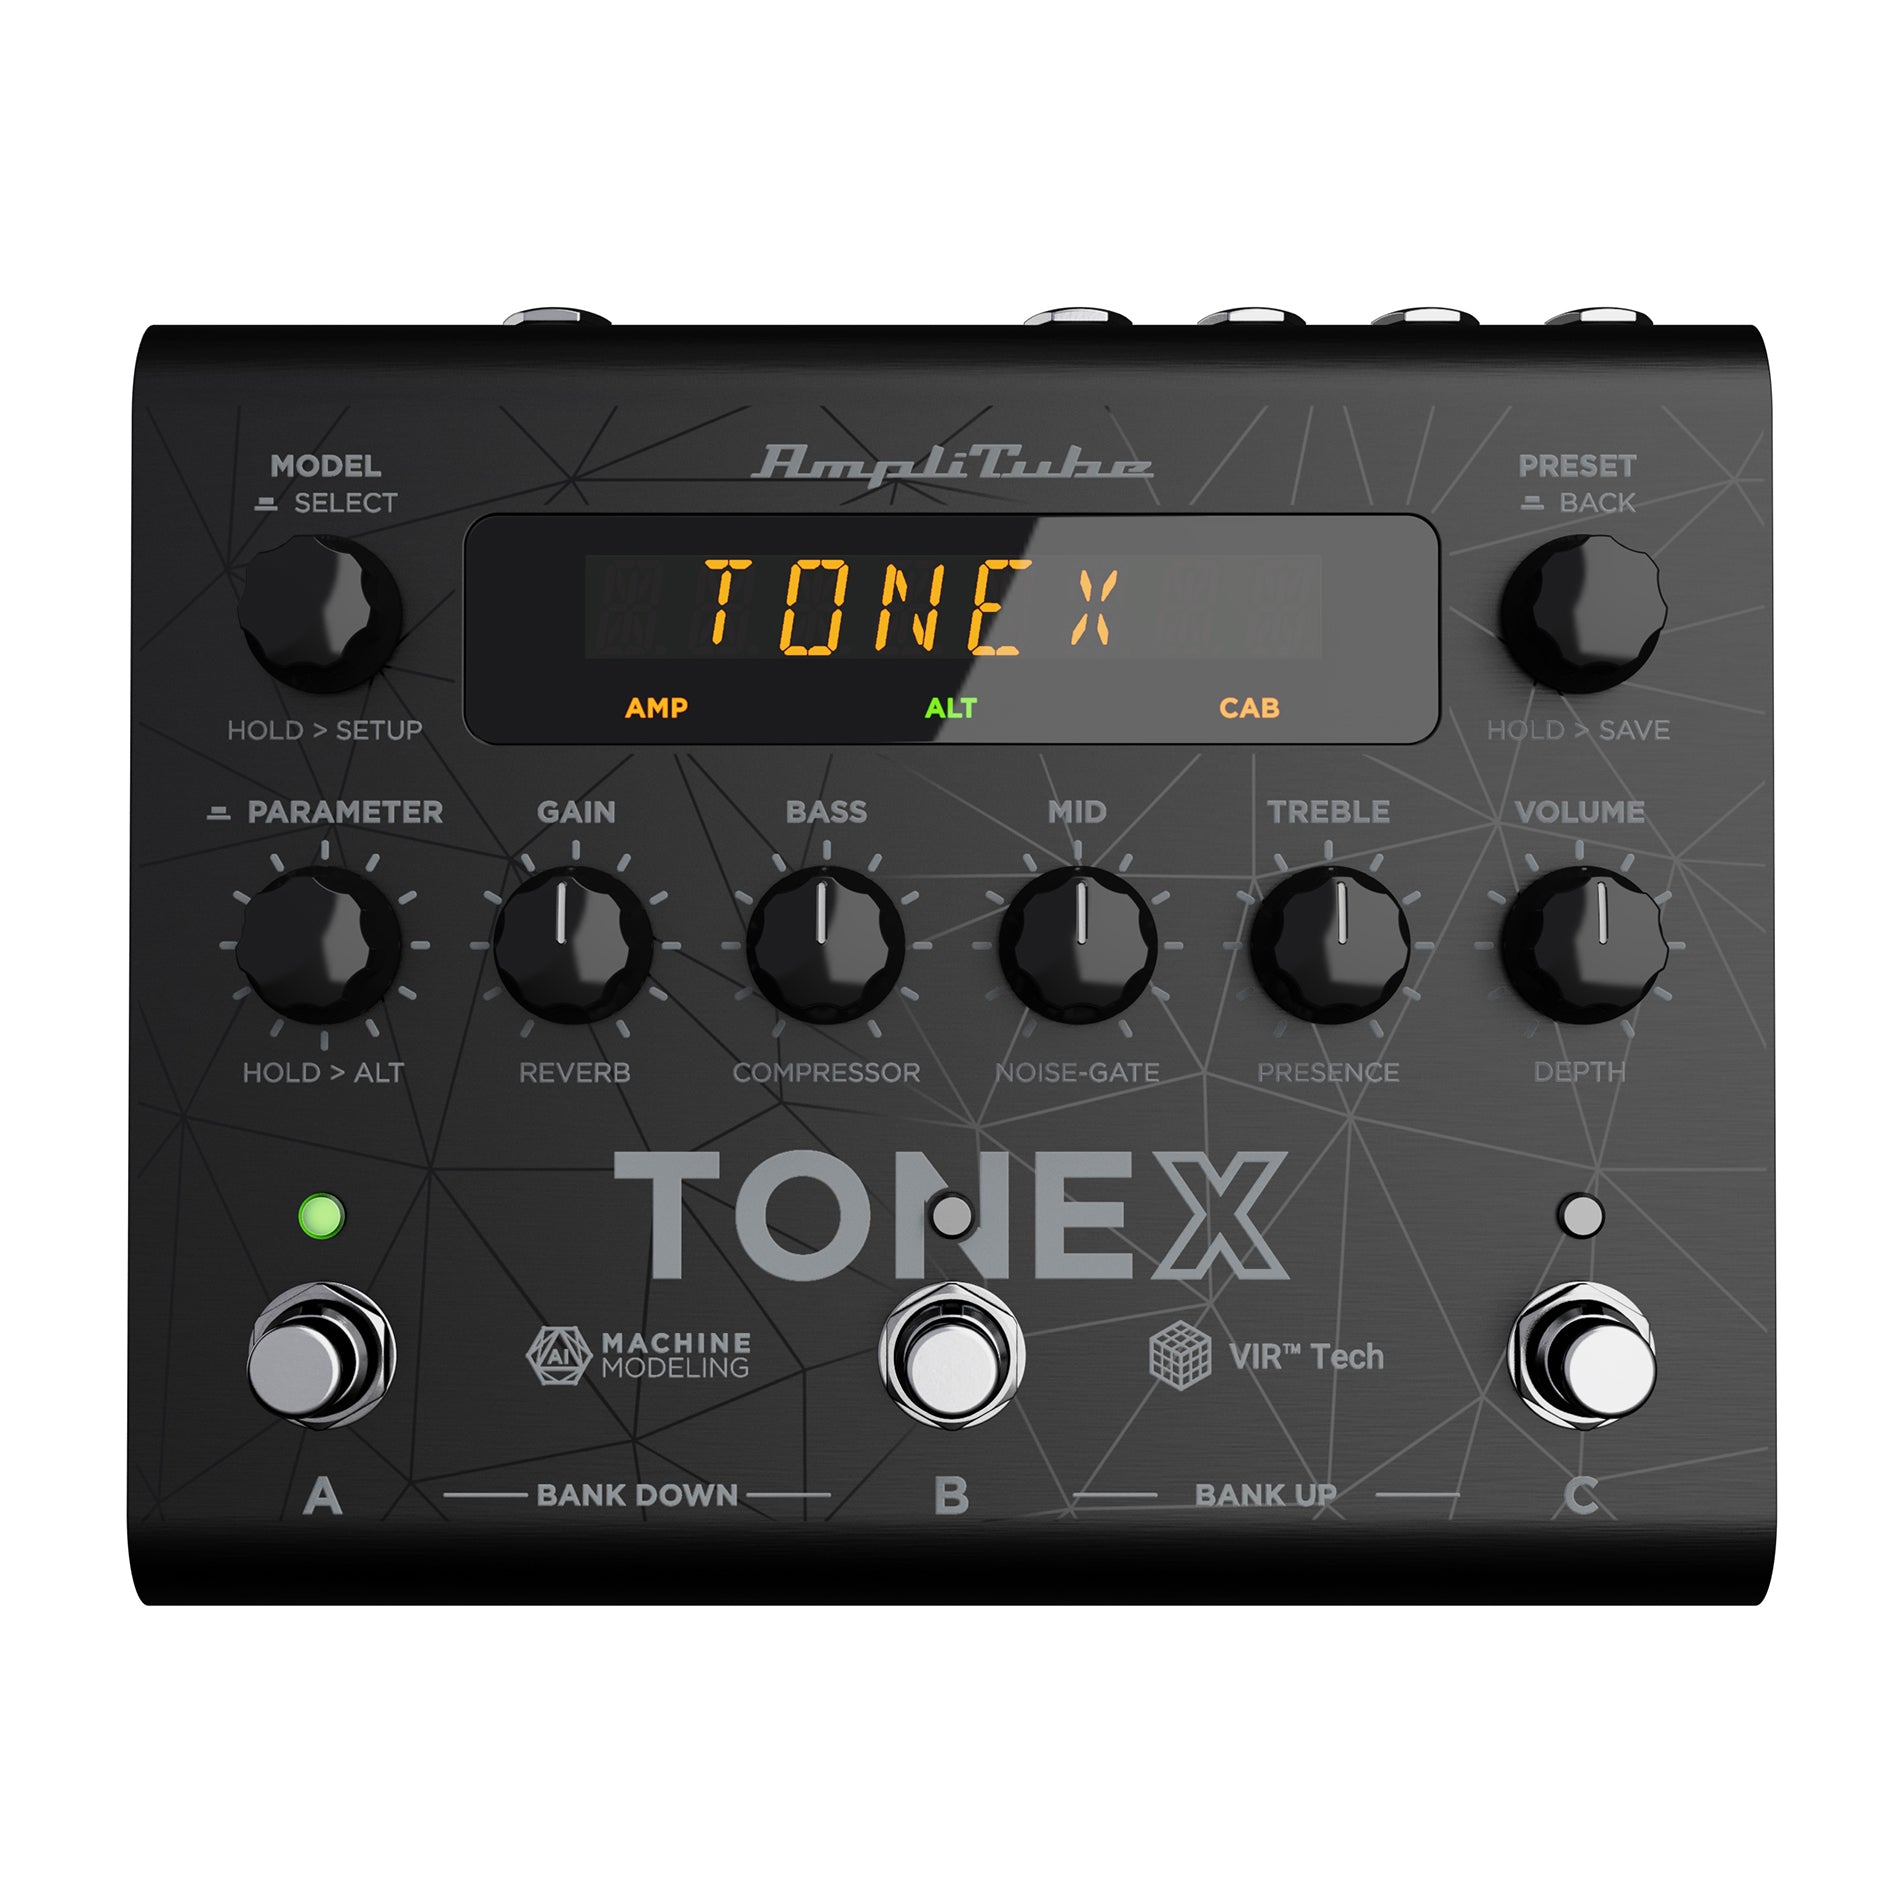 TONEX Pedal - IK Multimedia AmpliTube Amp Cab Sim - CB&G